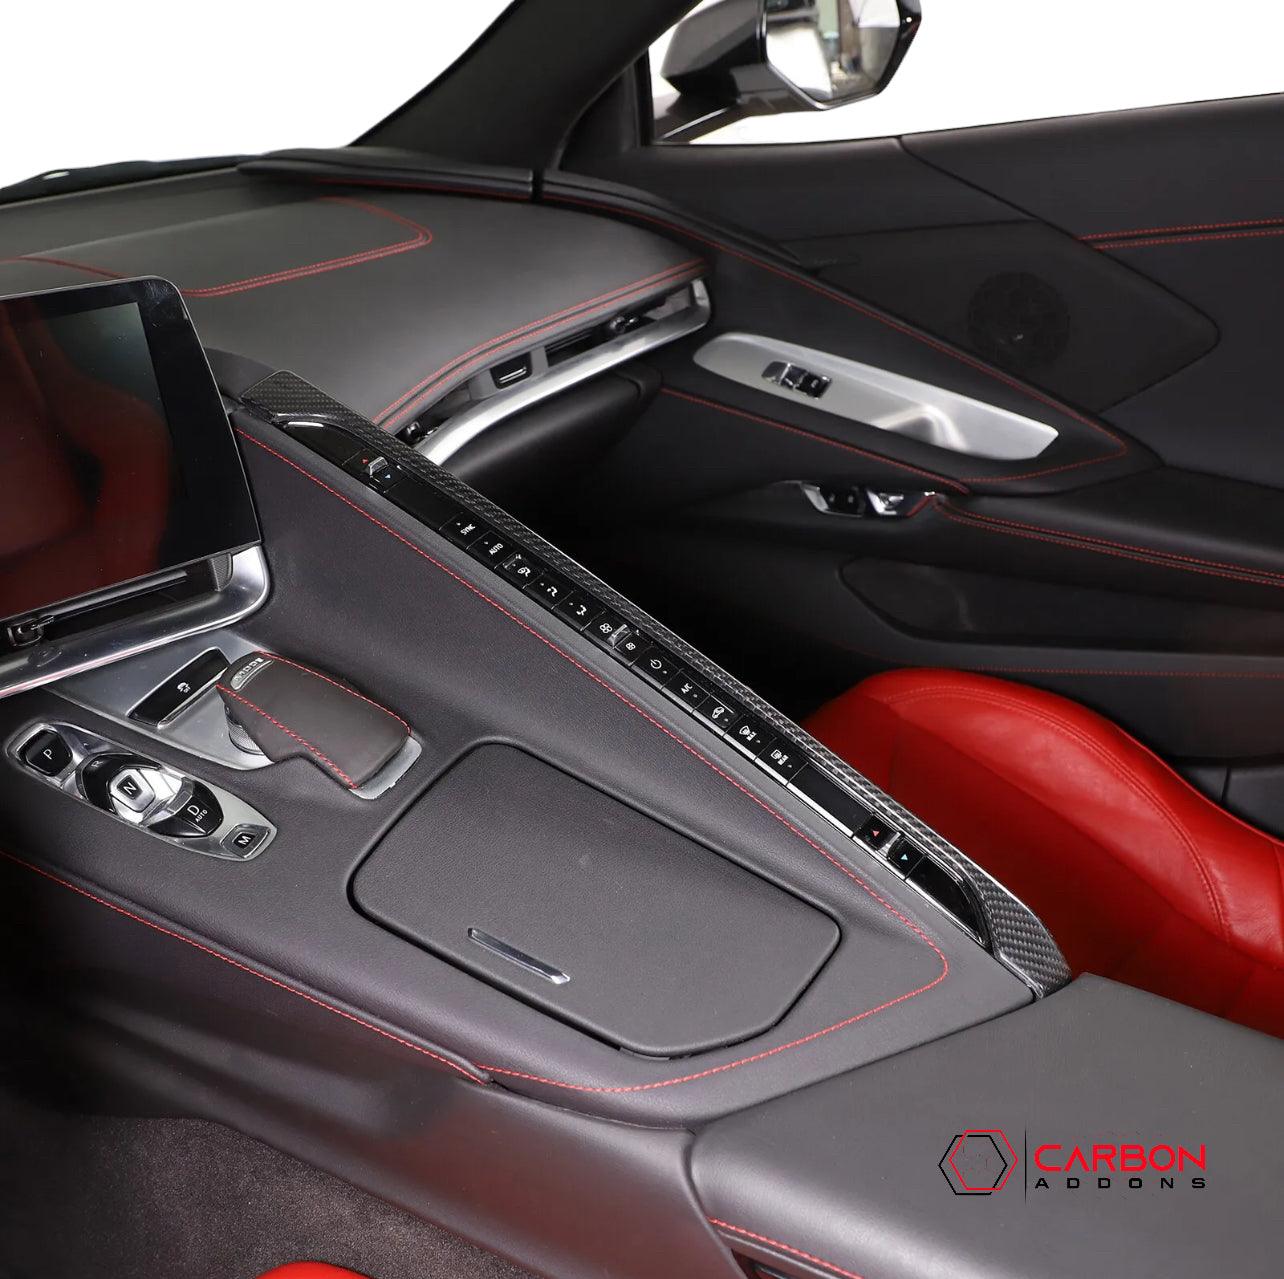 C8 Corvette Carbon Fiber Upper Right Center Console Cover - carbonaddons Carbon Fiber Parts, Accessories, Upgrades, Mods